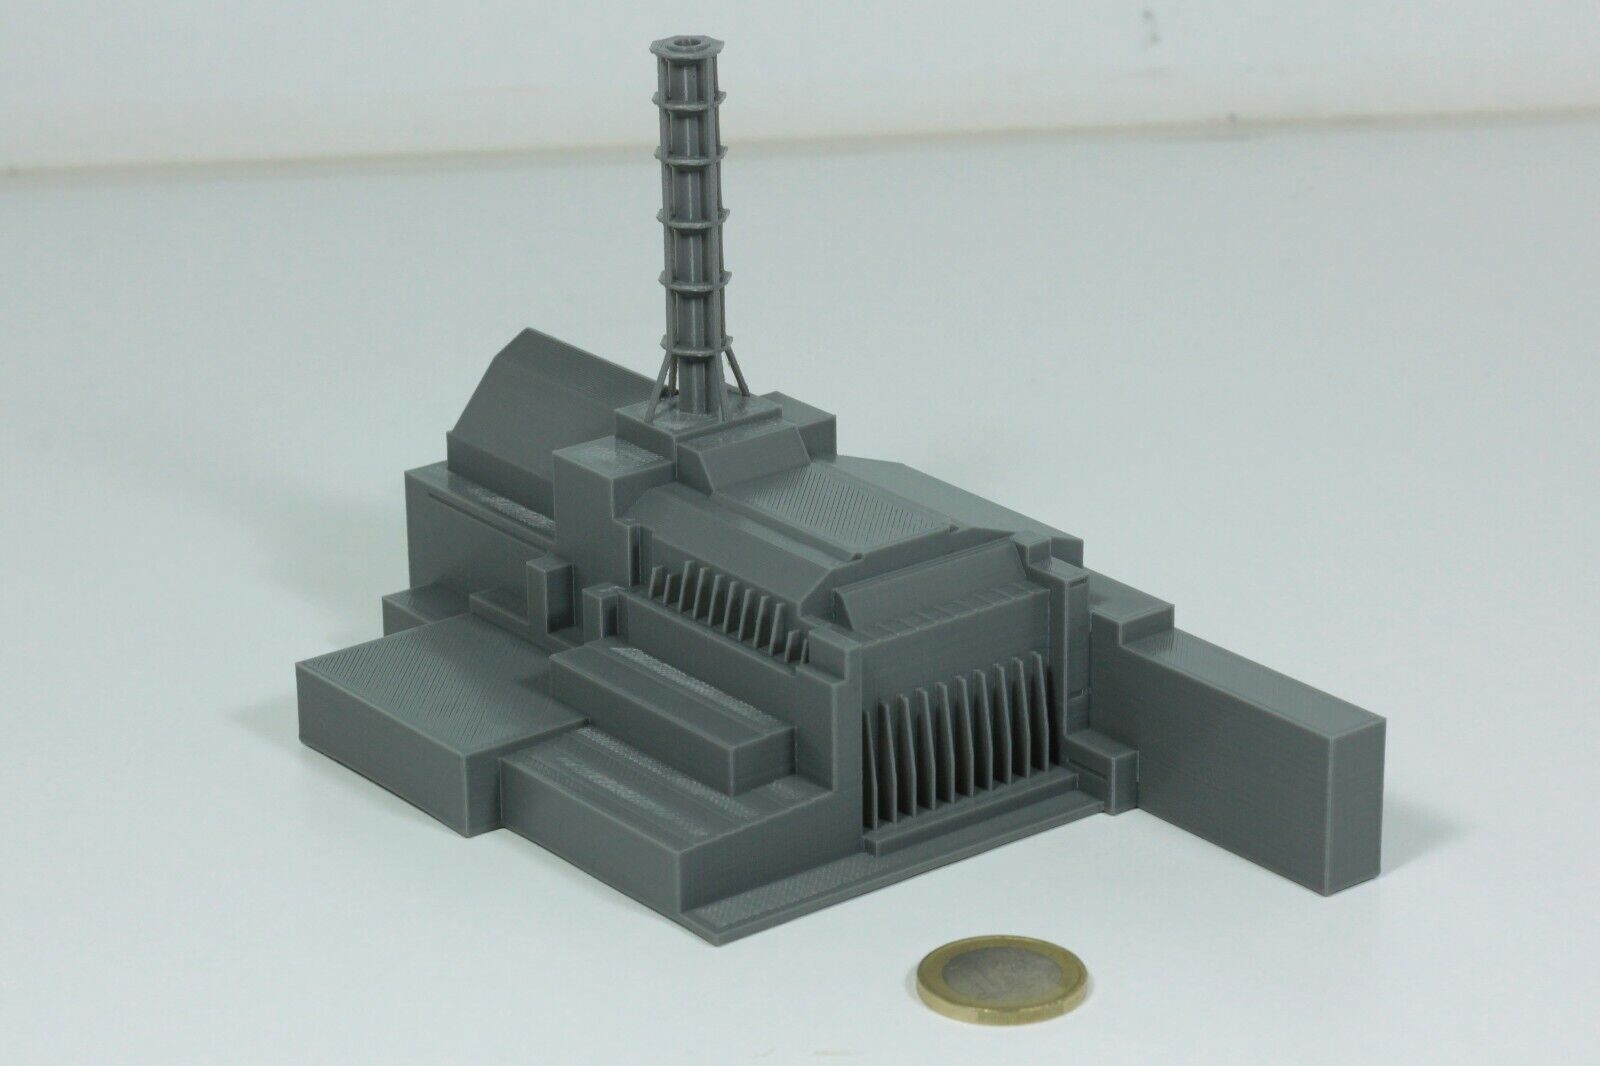 Chernobyl Disaster Nuclear Reactor Display Miniature Statue, 3D Print Souvenir